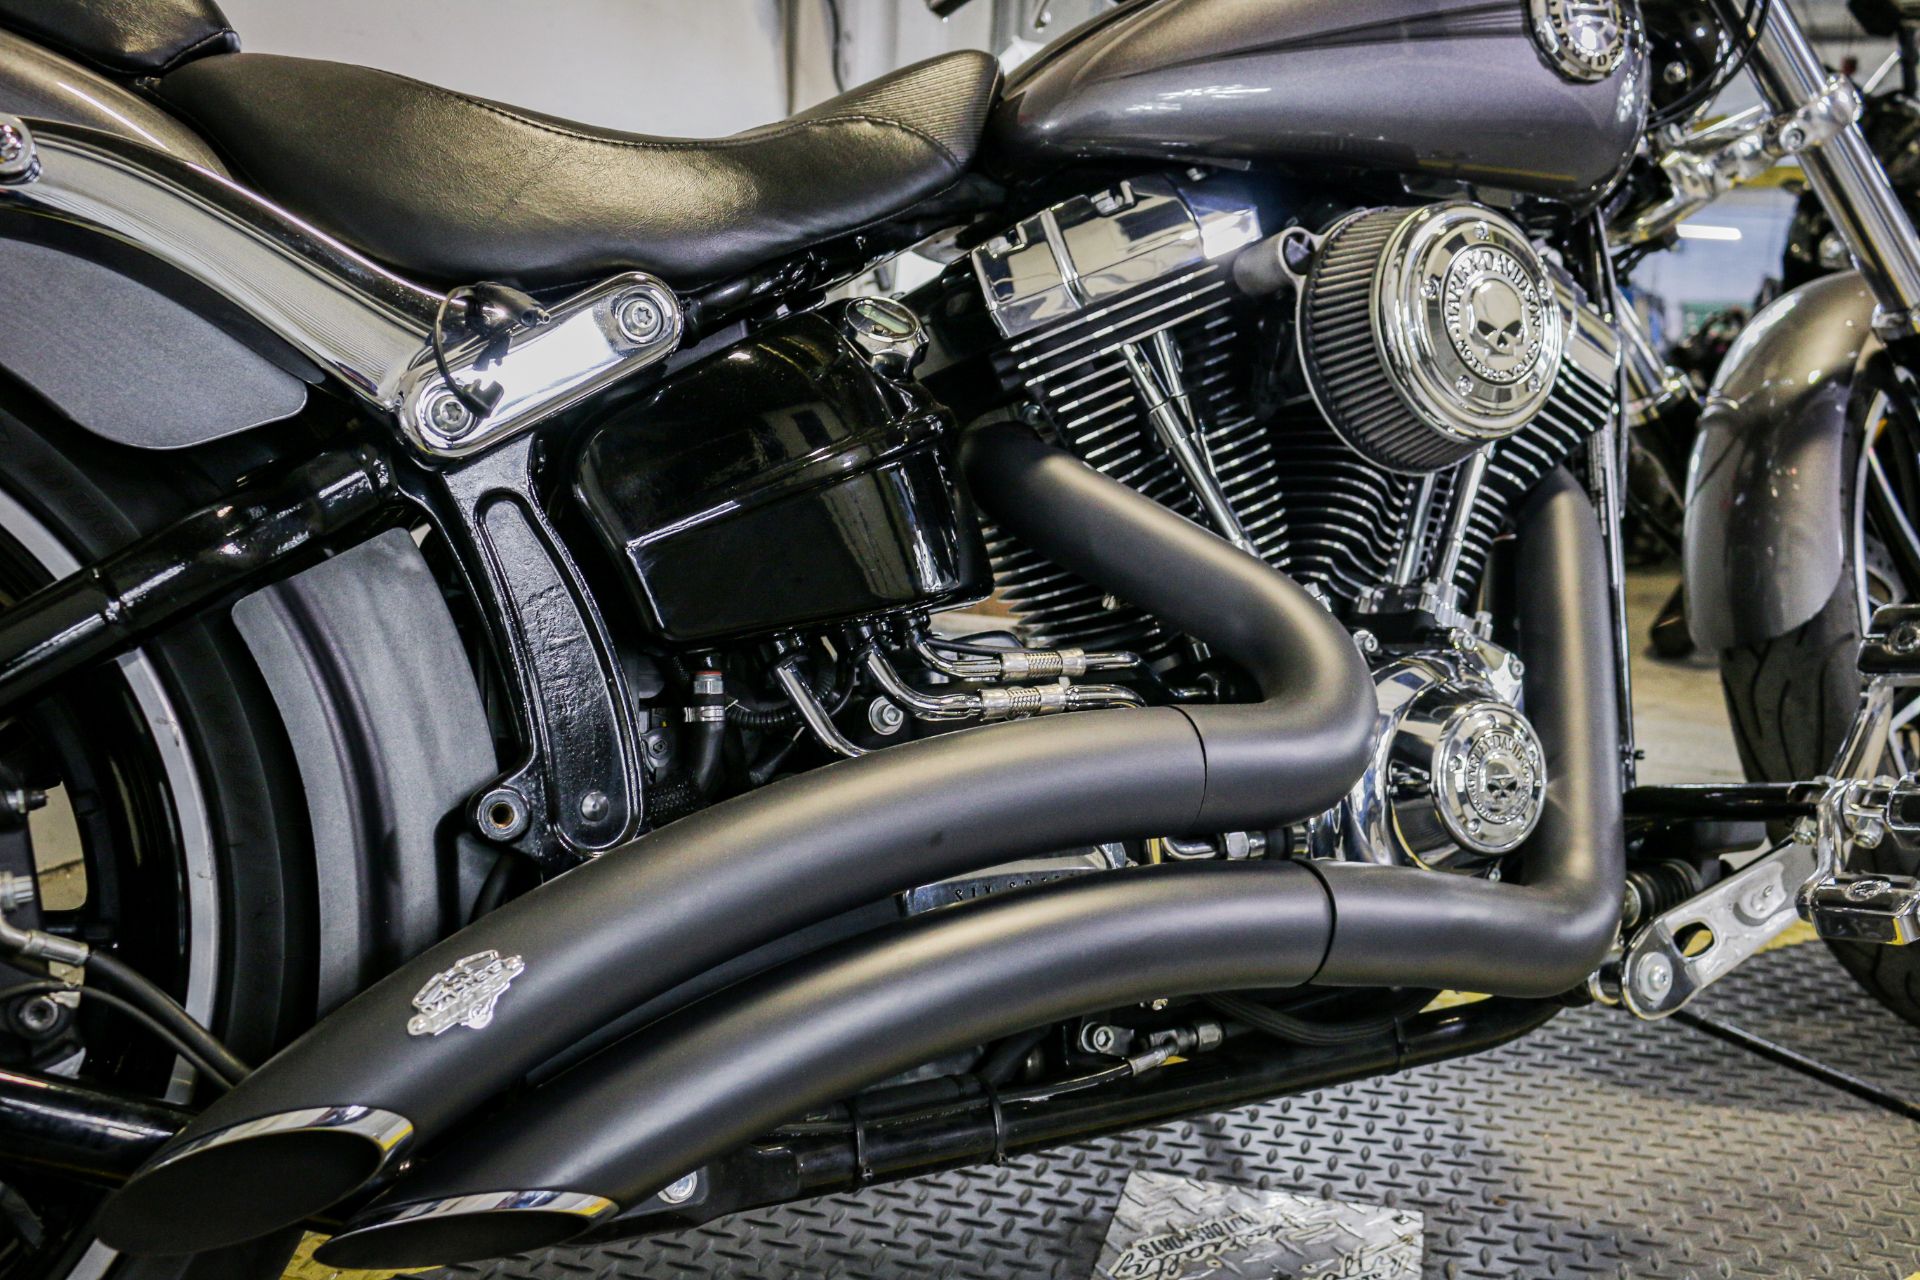 2015 Harley-Davidson Breakout® in Sacramento, California - Photo 8